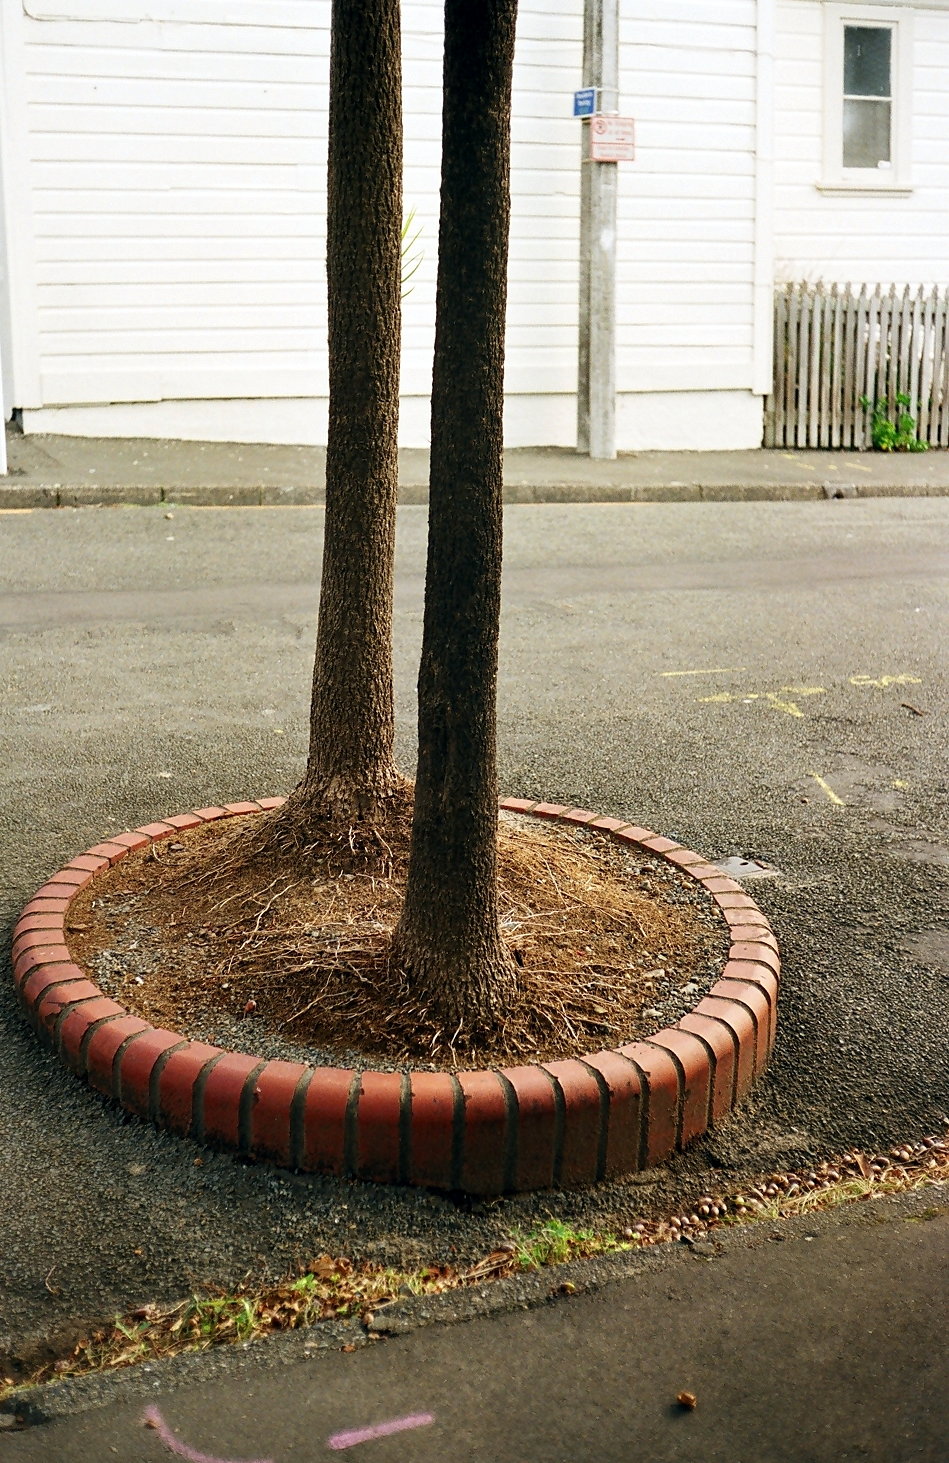 fotka / image cabbage trees
, prvn dvojrole film prohnan Yashicou M - Wellington, NZ